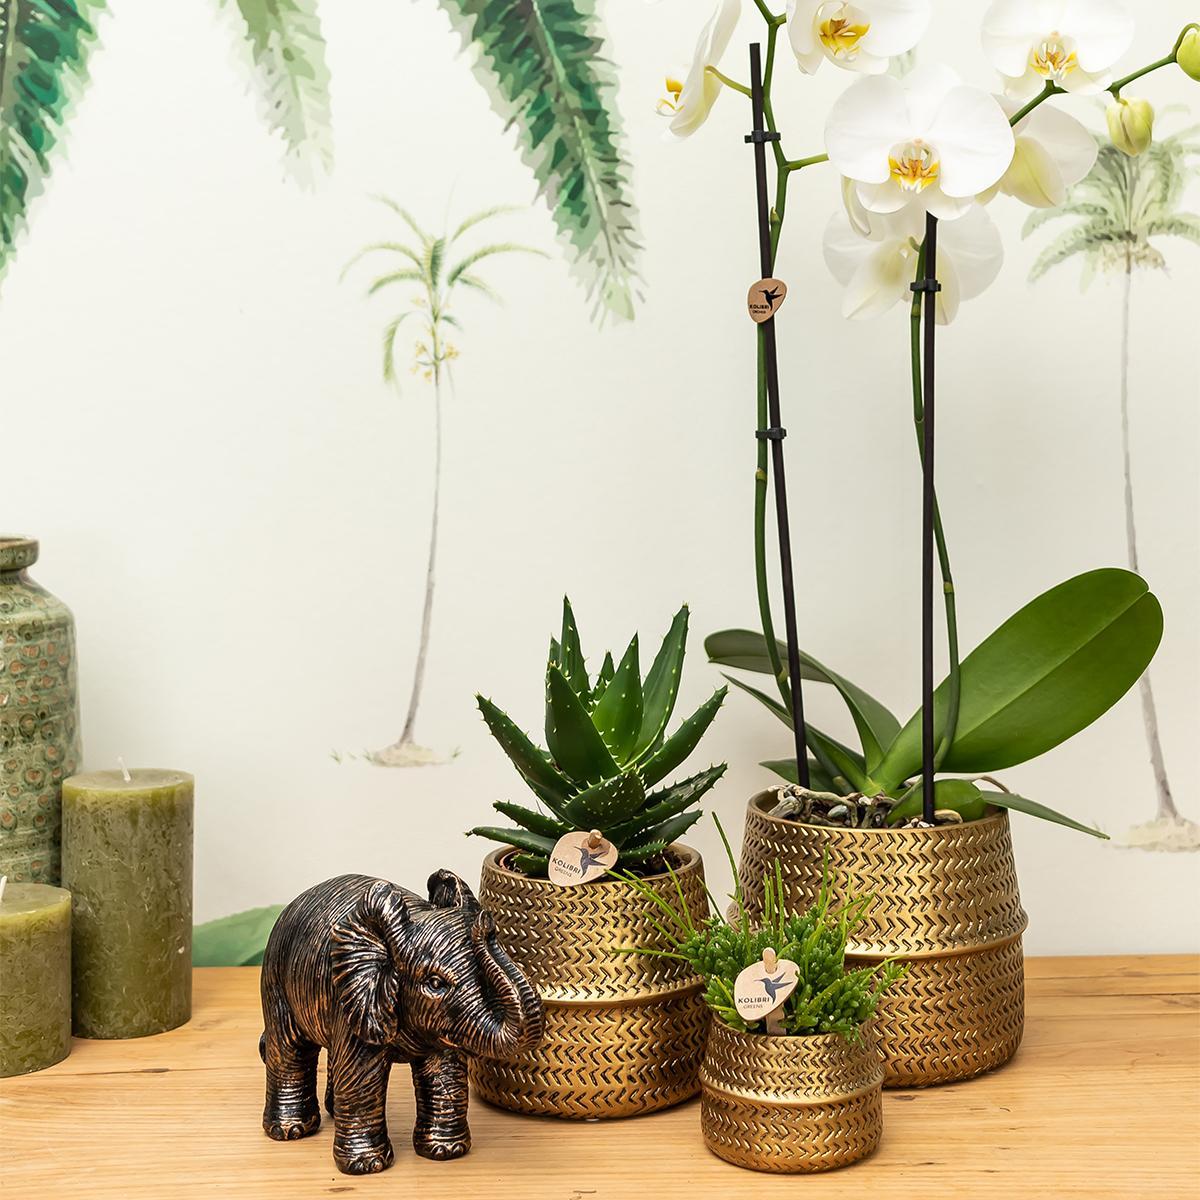 Kolibri Company - Planten set Groove goud | Set met witte Phalaenopsis orchidee Amabilis Ø9cm en groene plant Succulent Crassula Ovata Ø6cm  | incl. gouden keramieken sierpotten